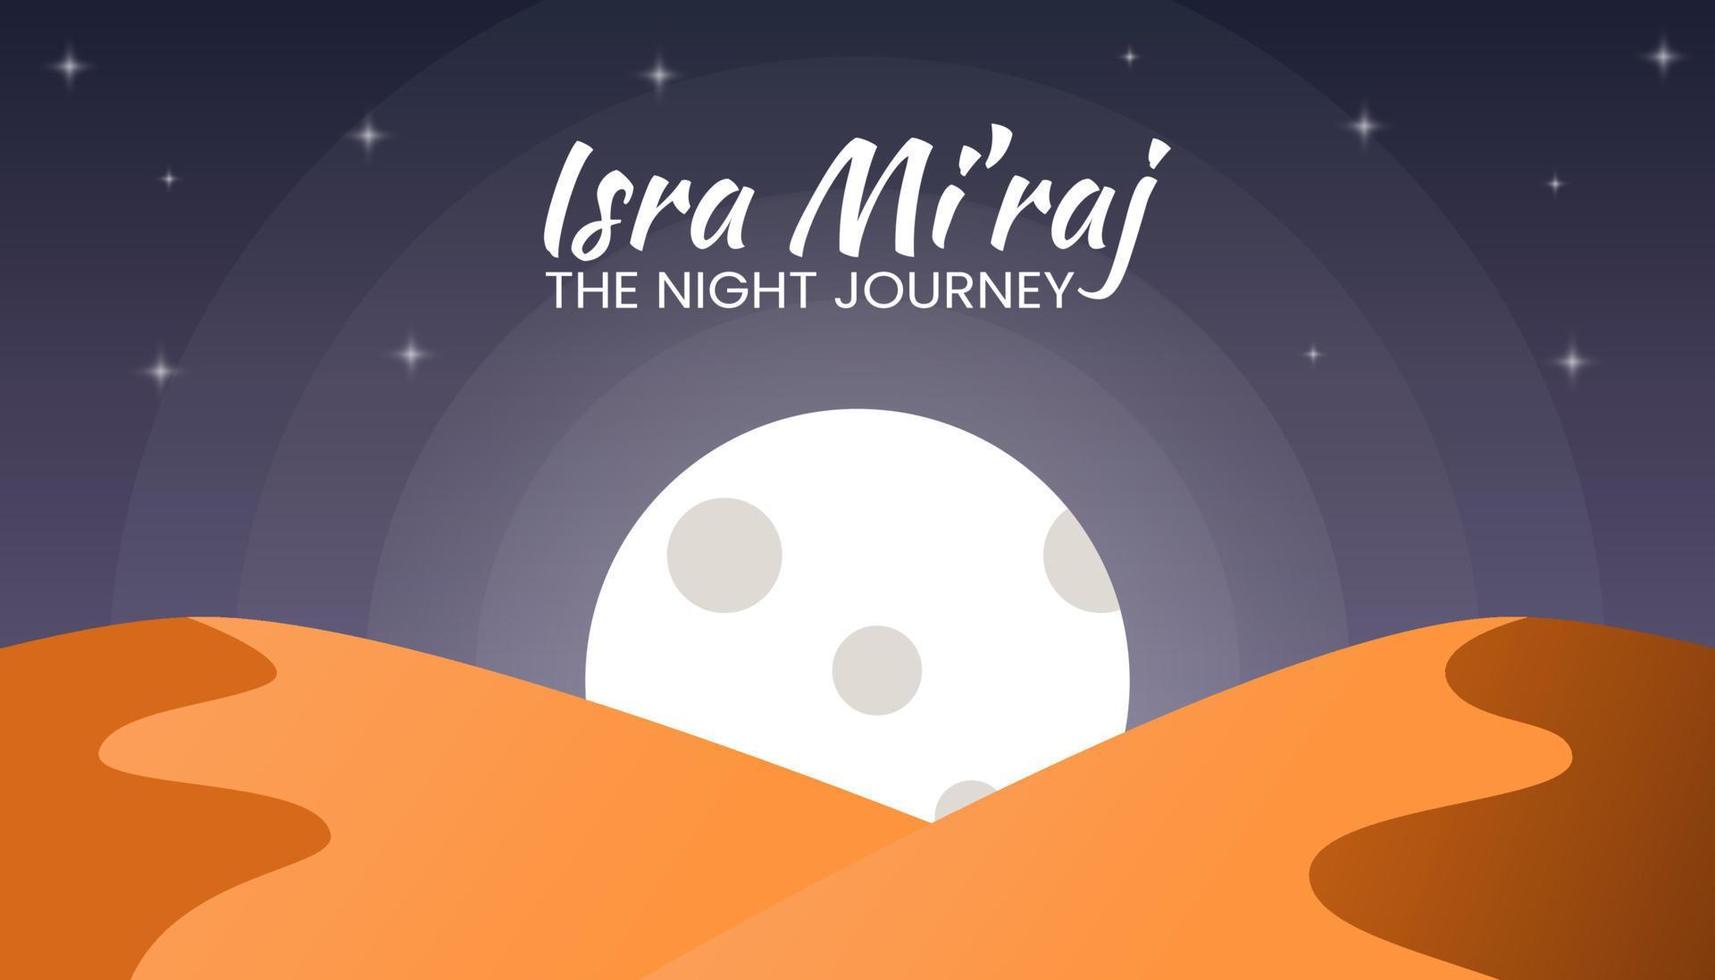 Isra Mi'raj means The night journey of the Prophet Muhammad vector